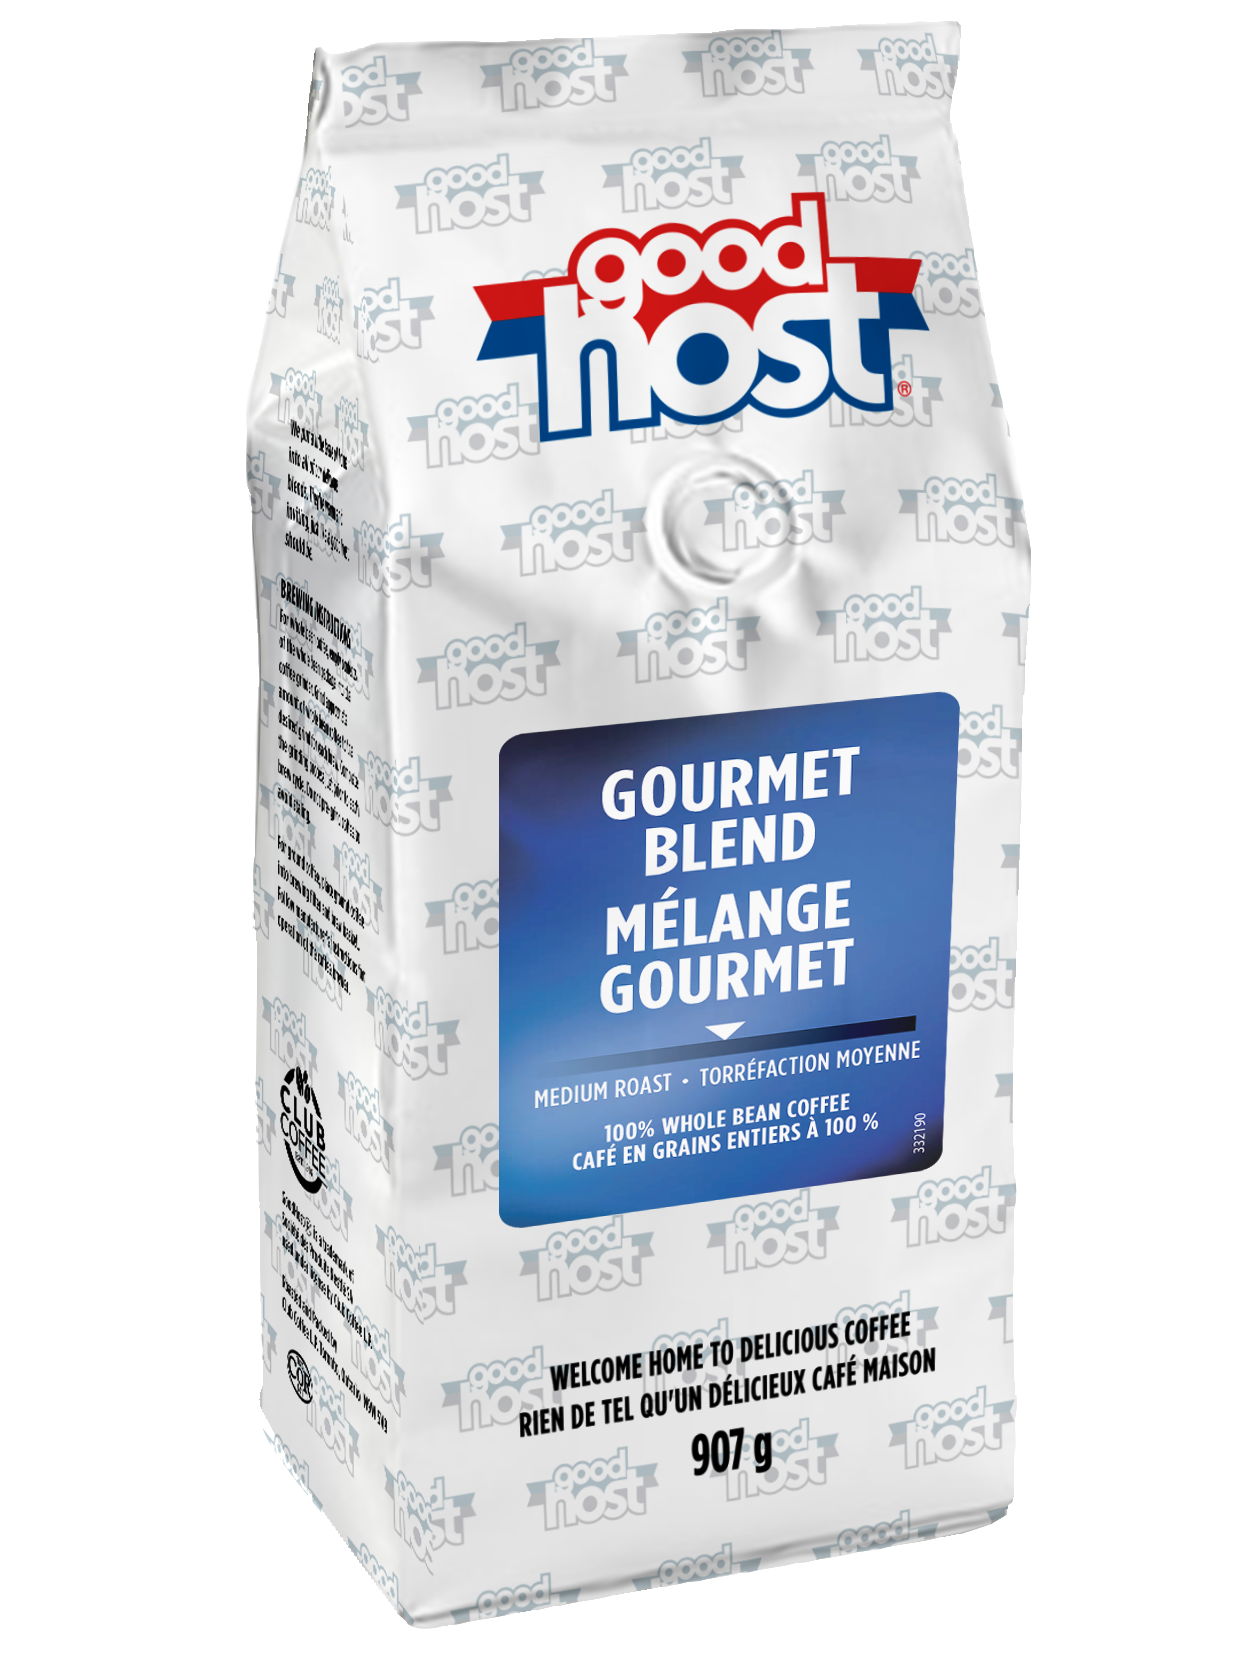 GoodHost Gourmet Blend Whole Bean Coffee 2Lb Bag